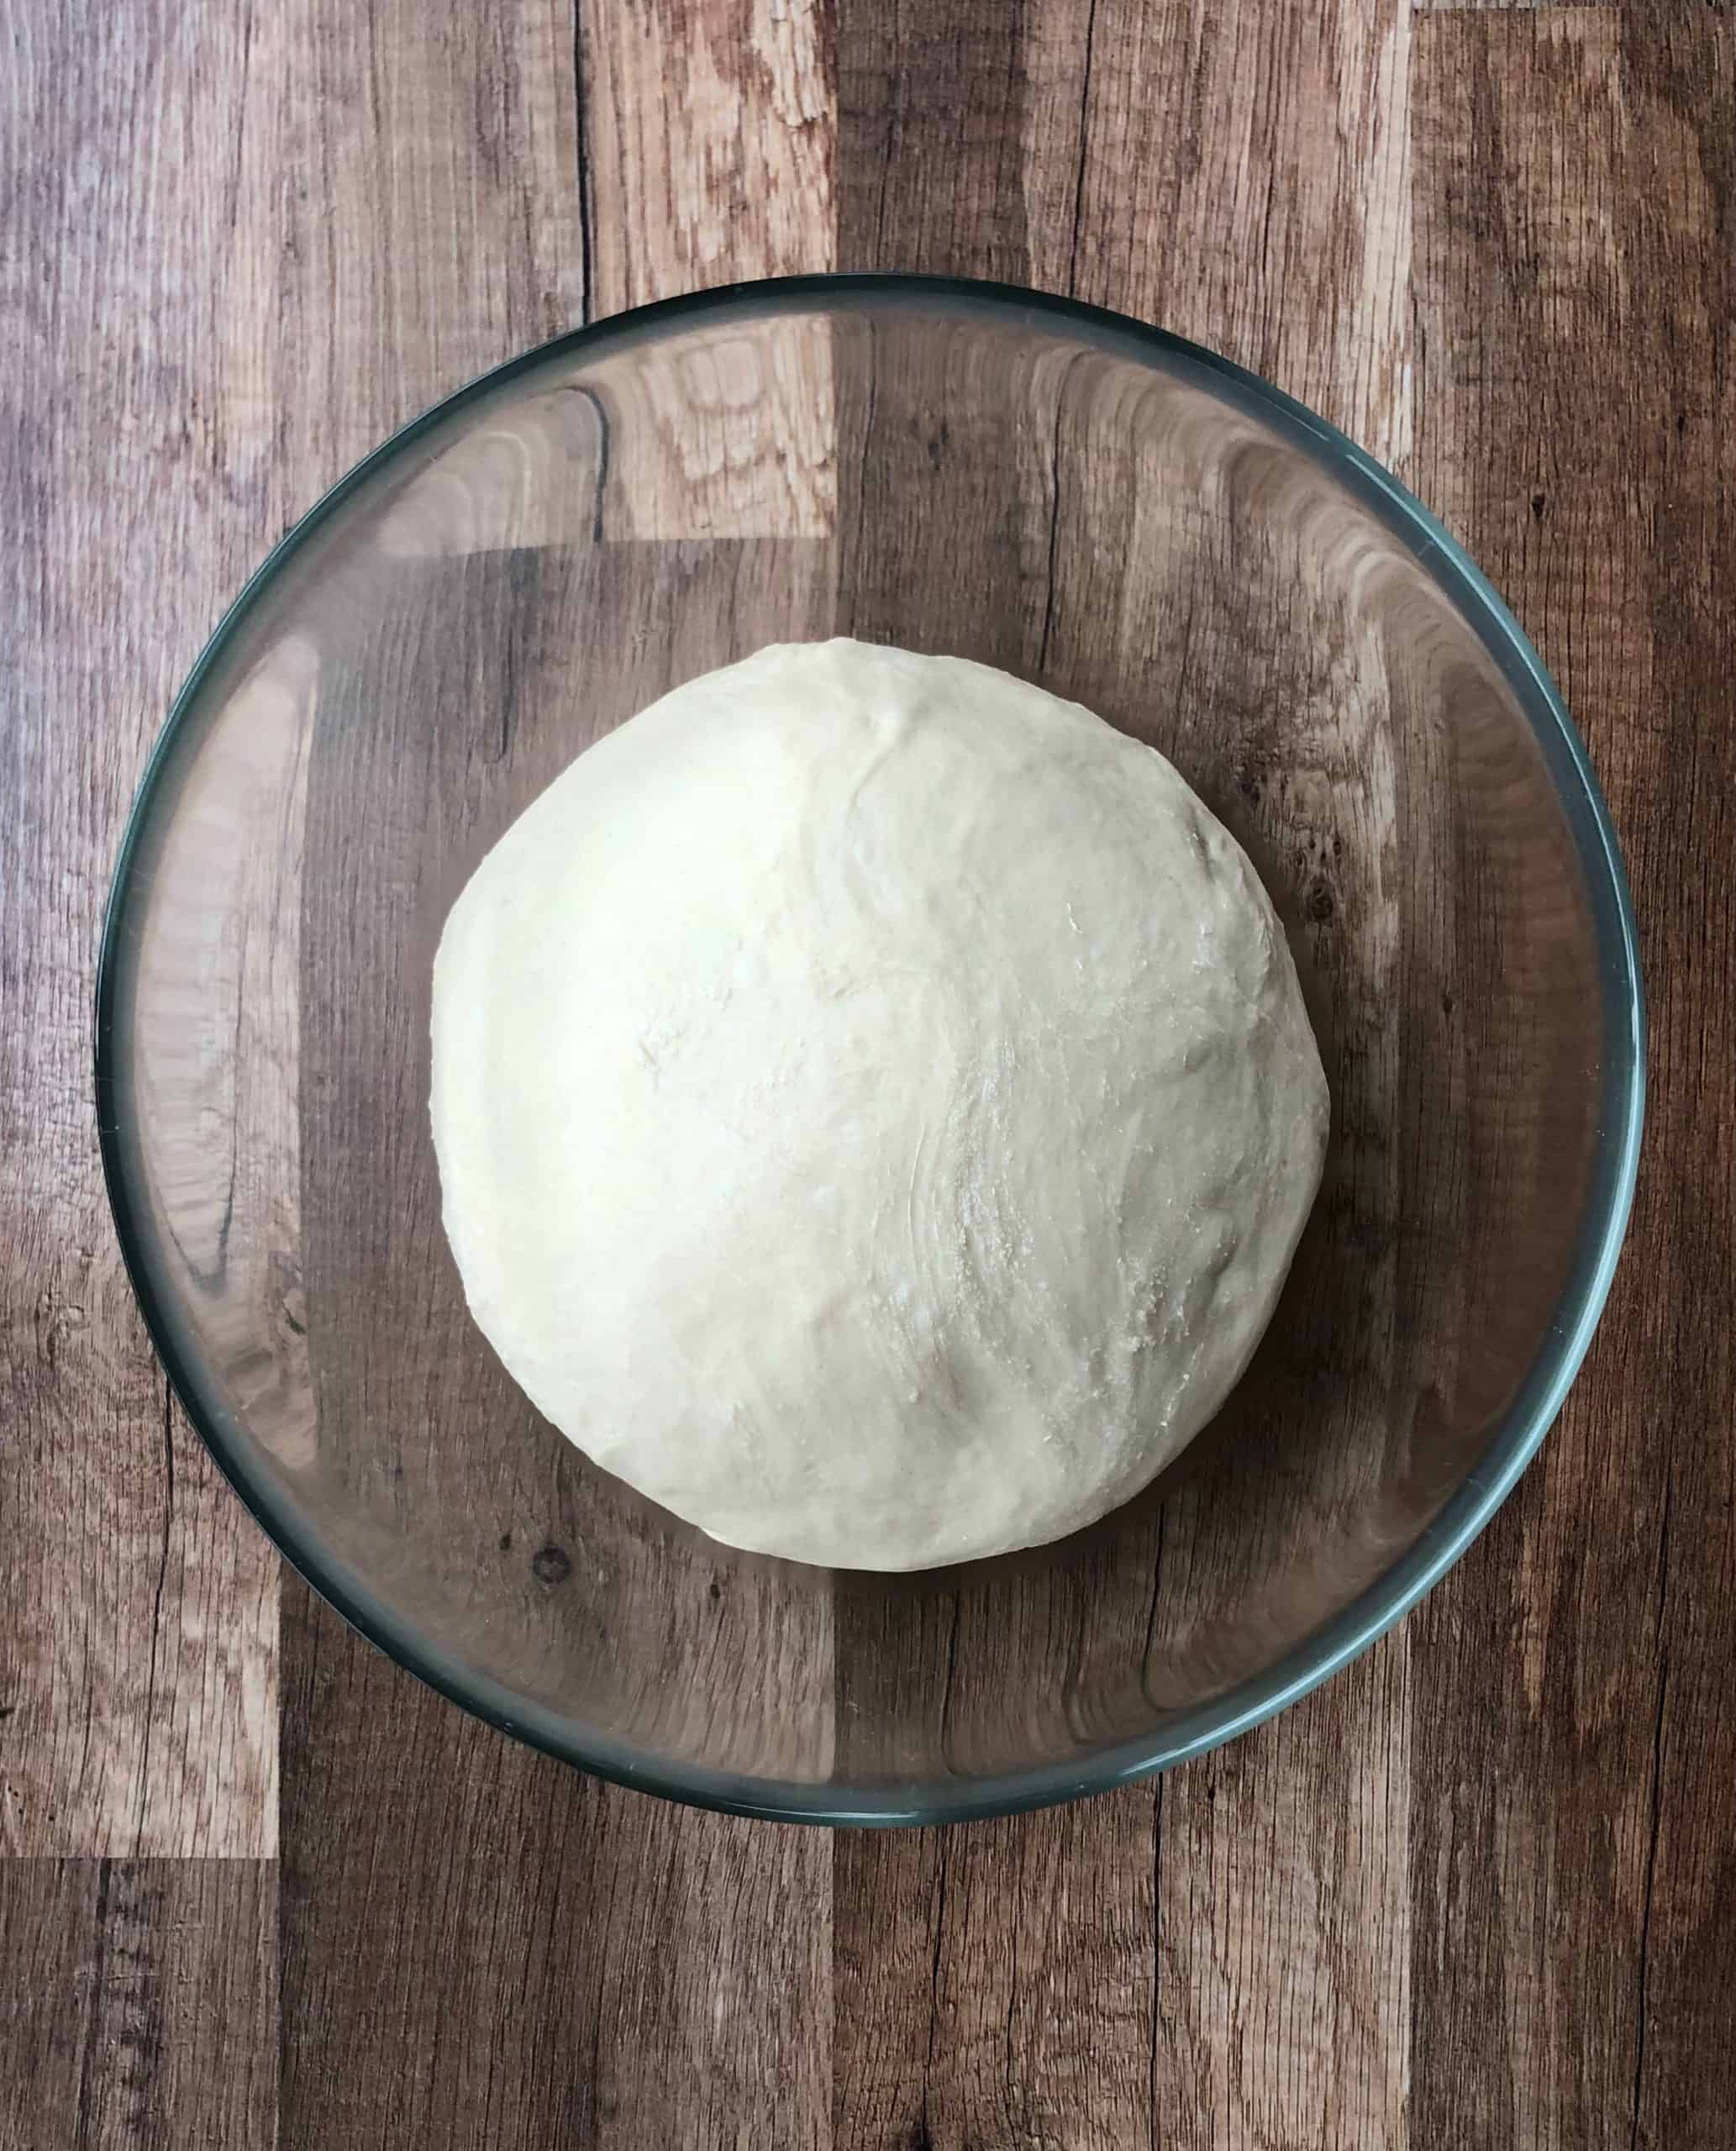 Greek Pita bread dough proofing